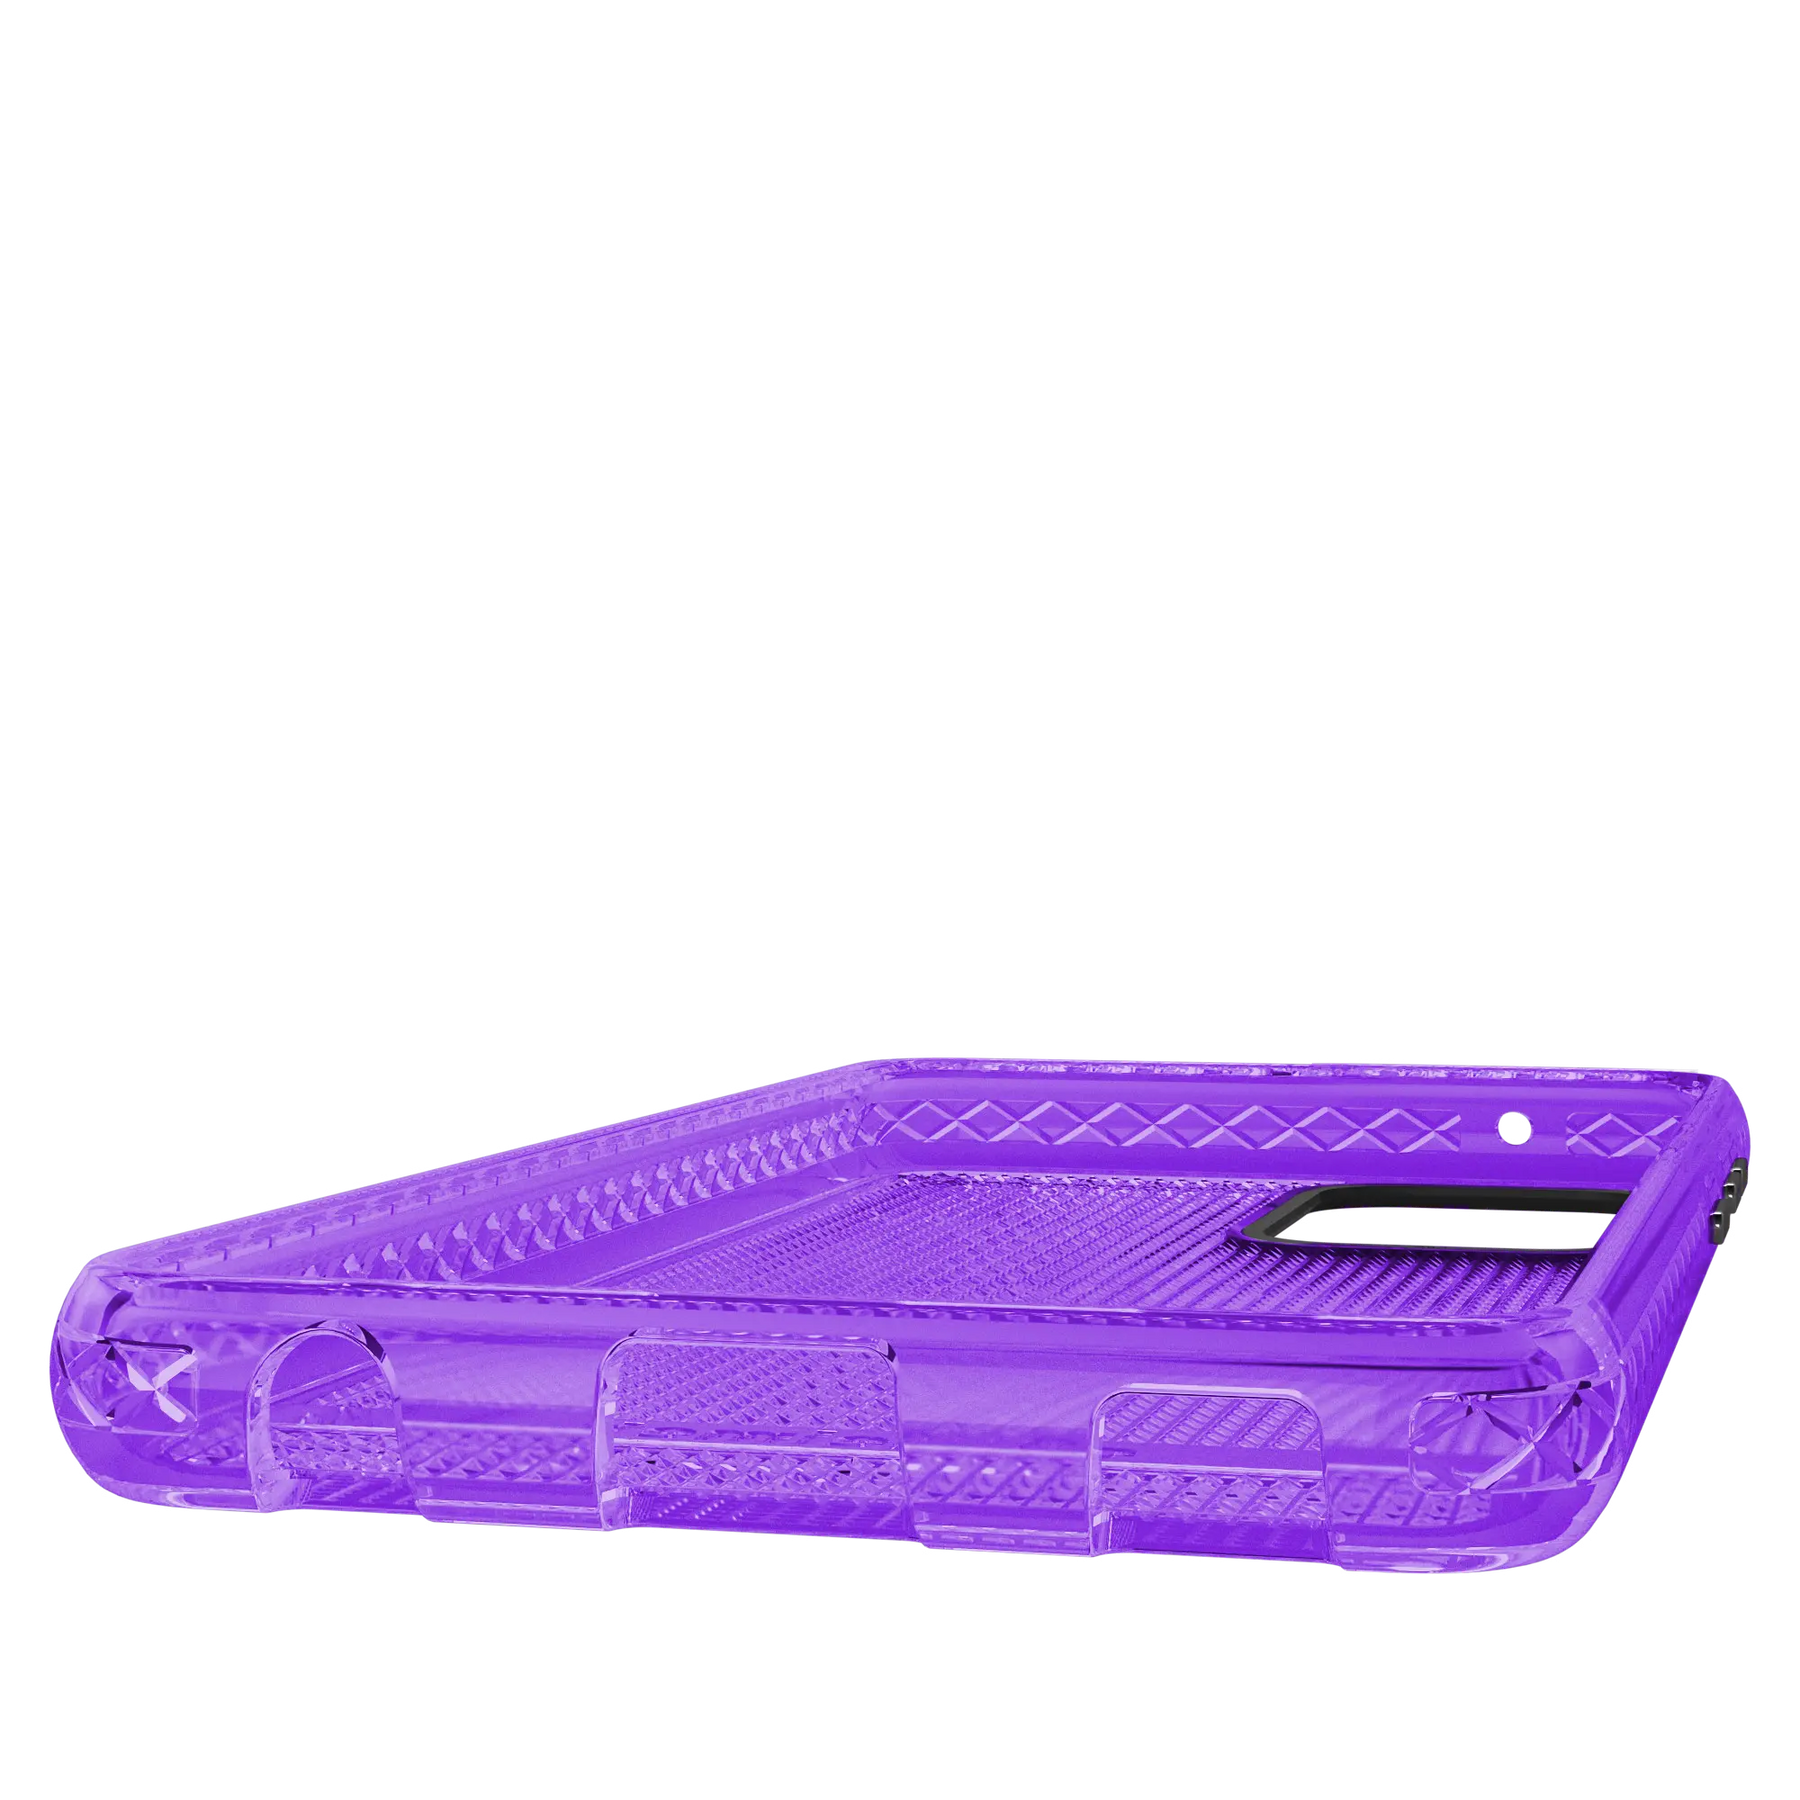 Altitude X Series for Samsung Galaxy A52 5G  - Purple - Case -  - cellhelmet